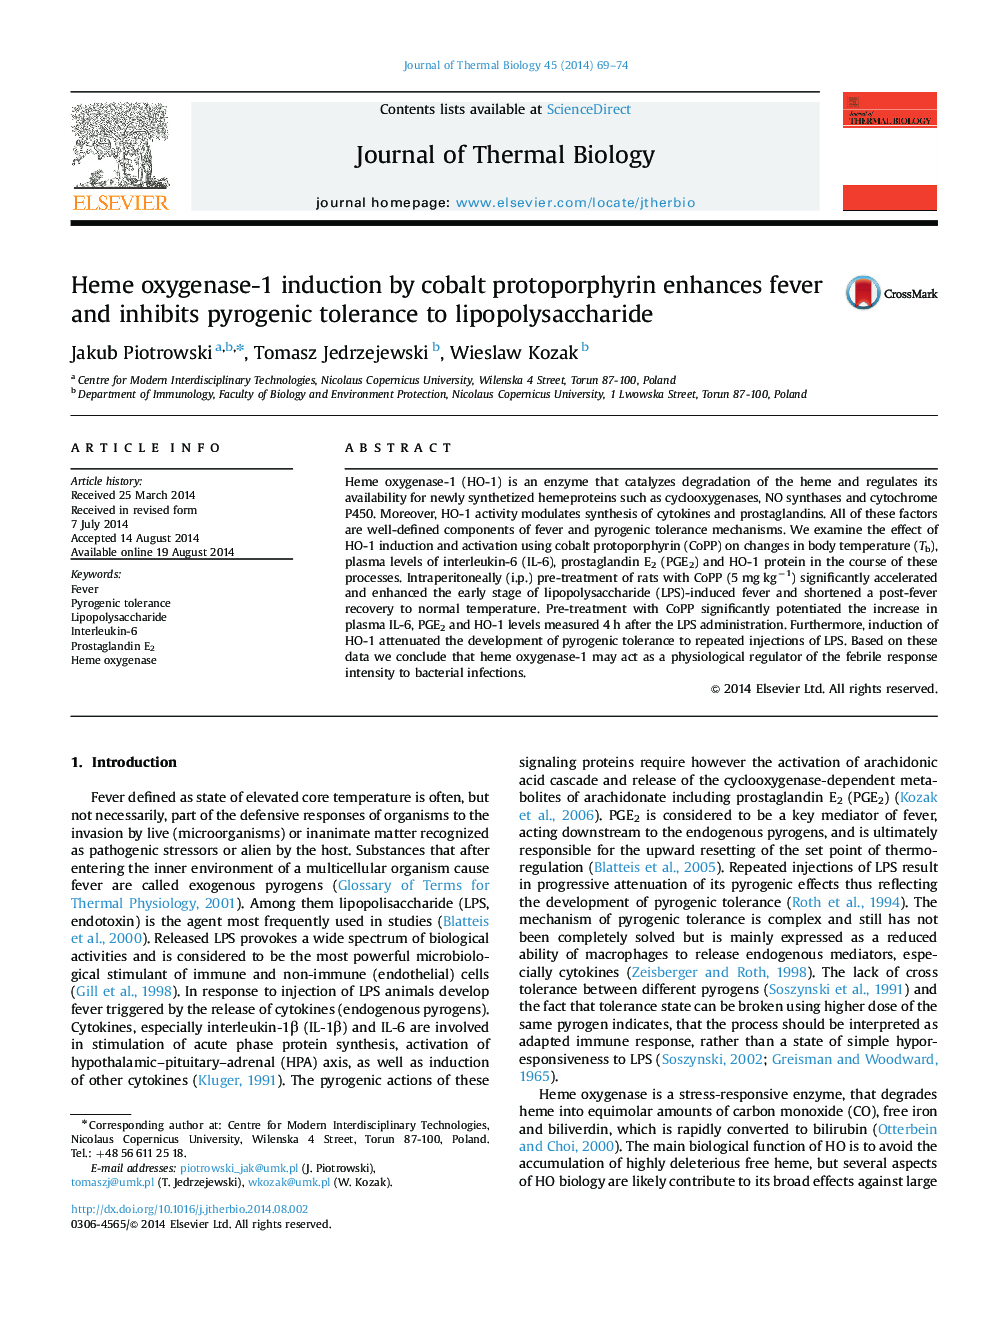 Heme oxygenase-1 induction by cobalt protoporphyrin enhances fever and inhibits pyrogenic tolerance to lipopolysaccharide